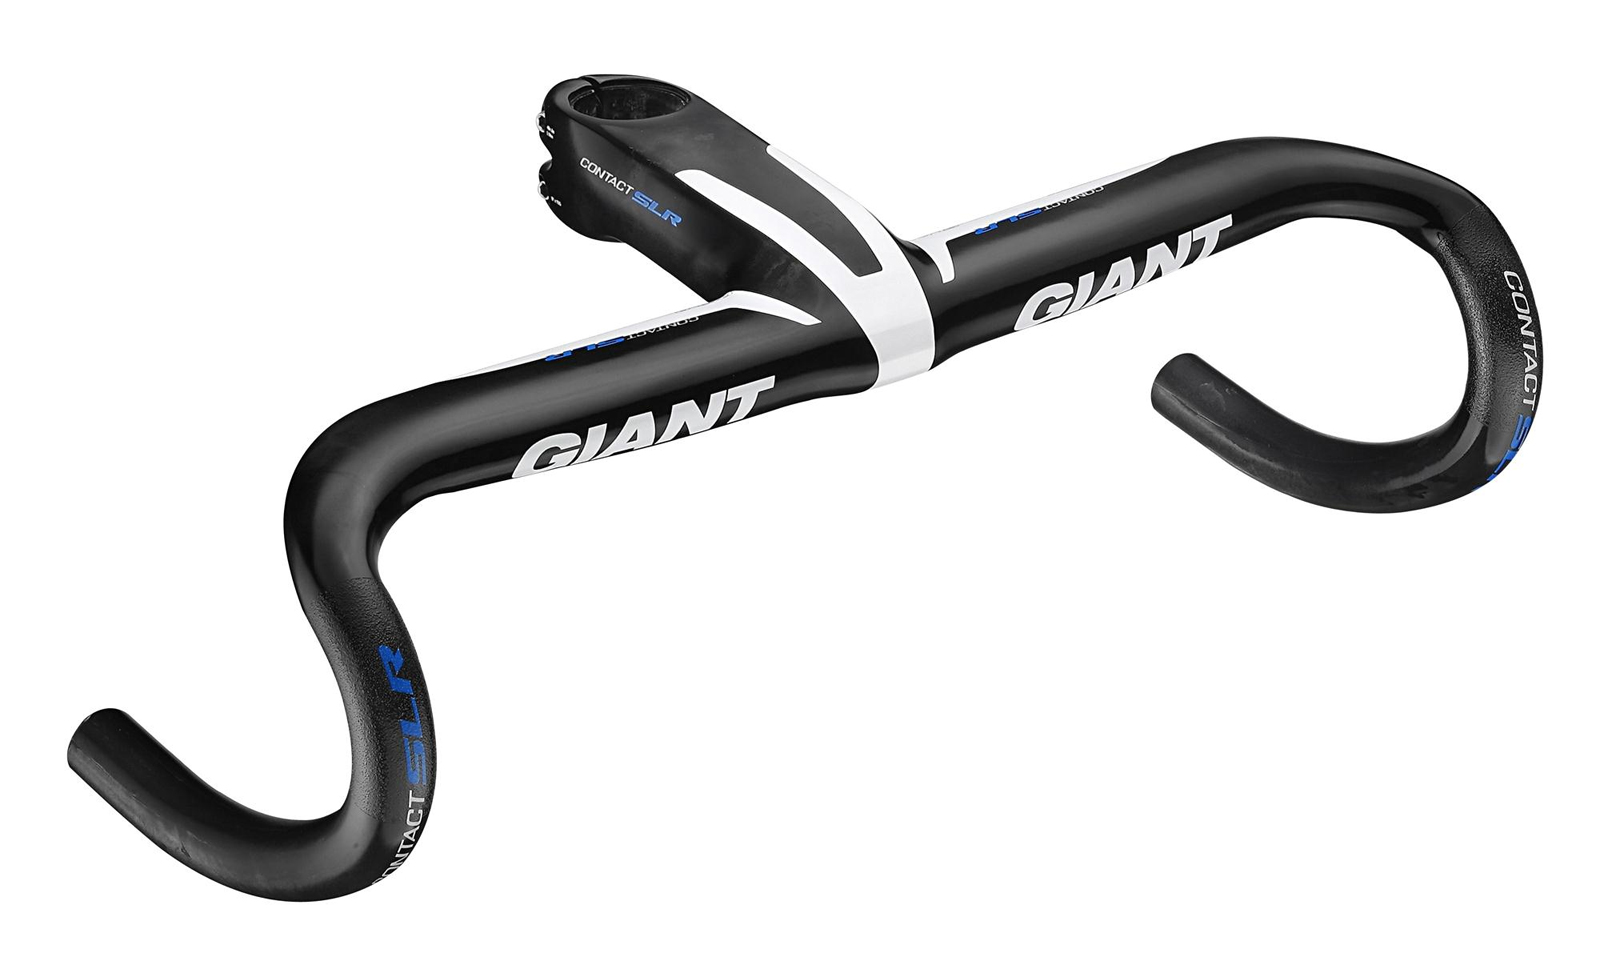 Giant Contact SLR Aero Integrated Handlebar - Planet Bike East 